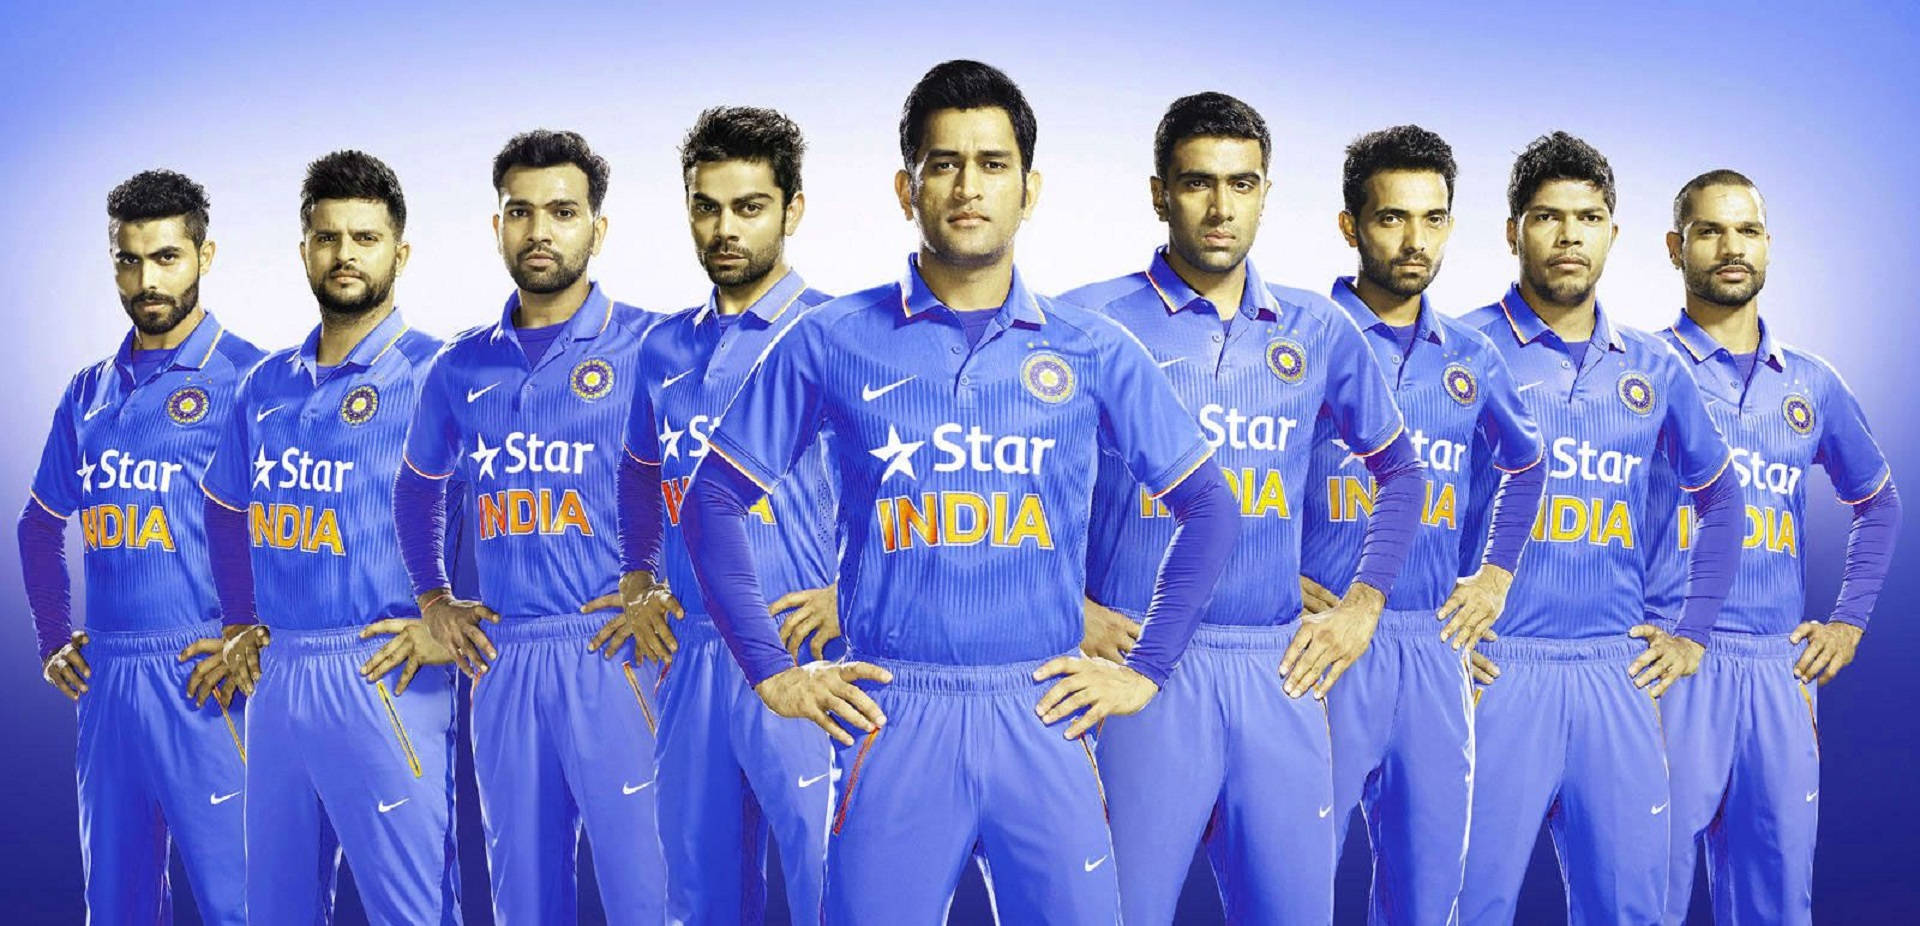 Indisk Cricket Wallpaper